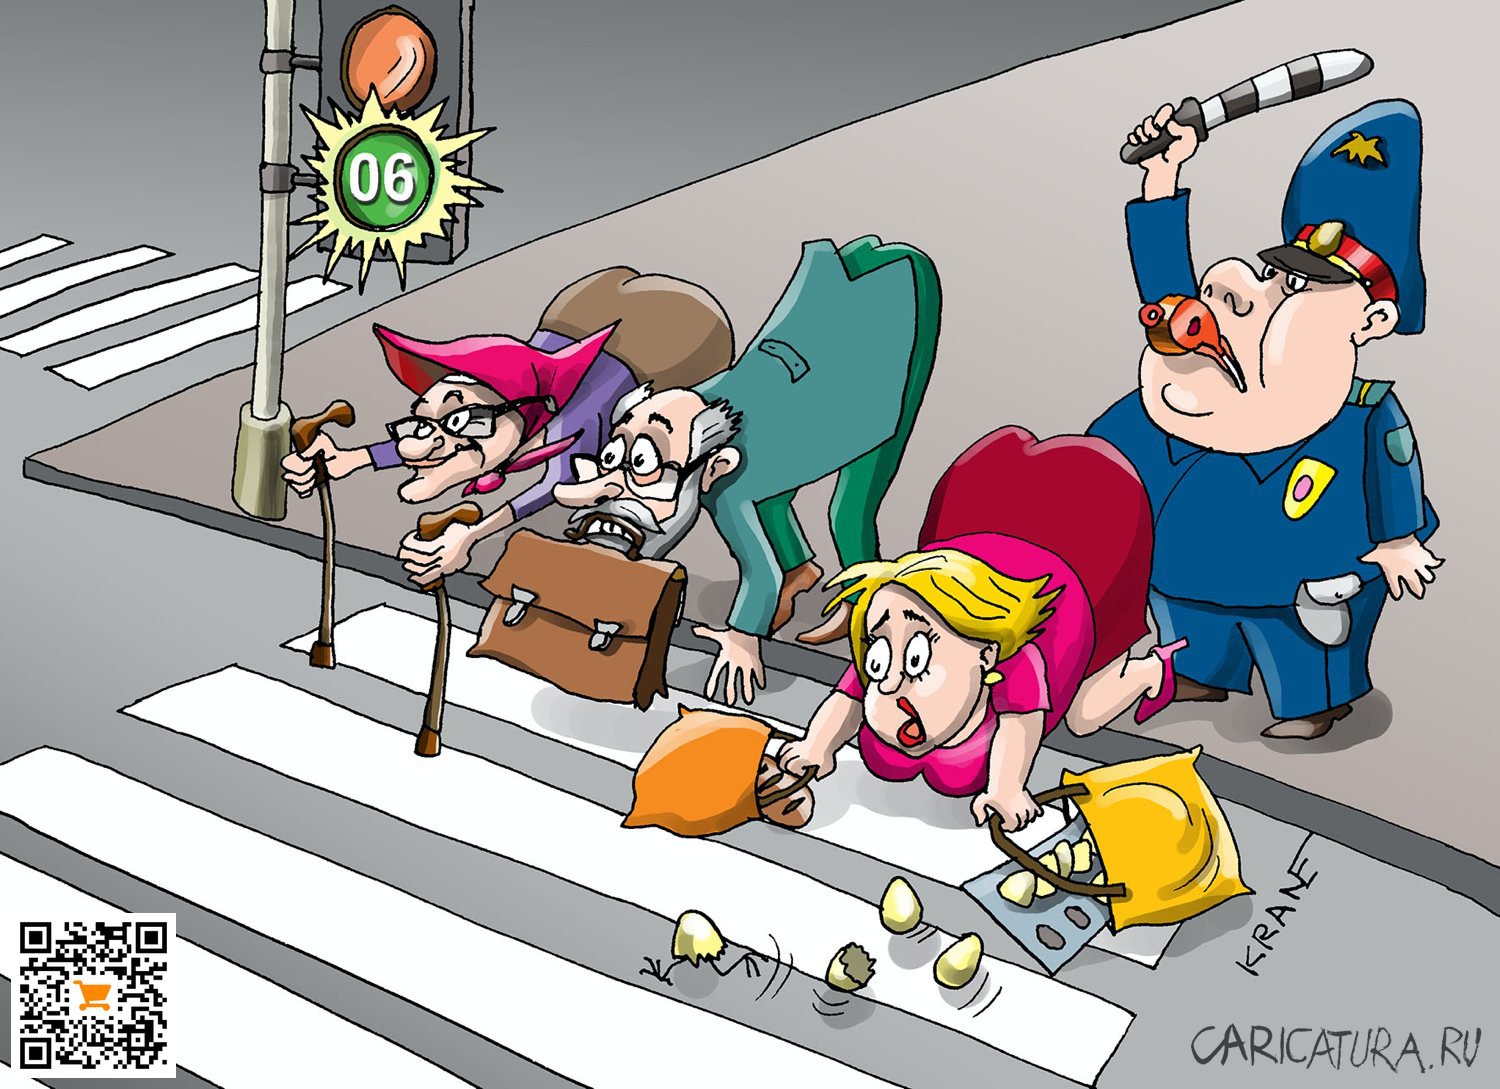 Карикатура "На пешеходном переходе спринтеры и пенсионеры и ин", Евгений Кран